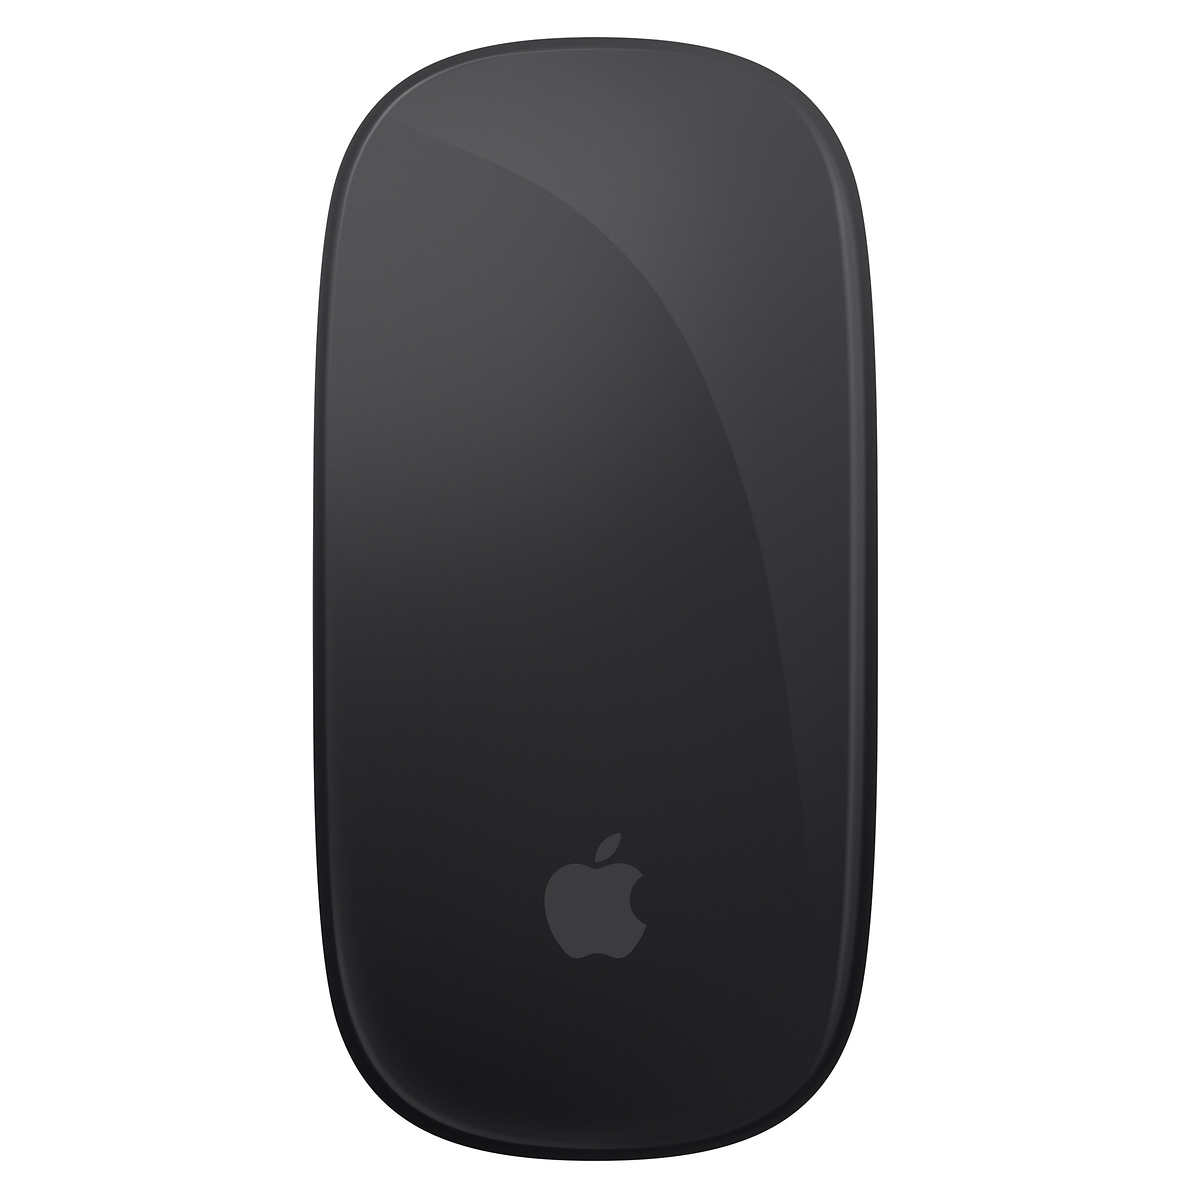 Apple Magic Mouse, Black | Costco